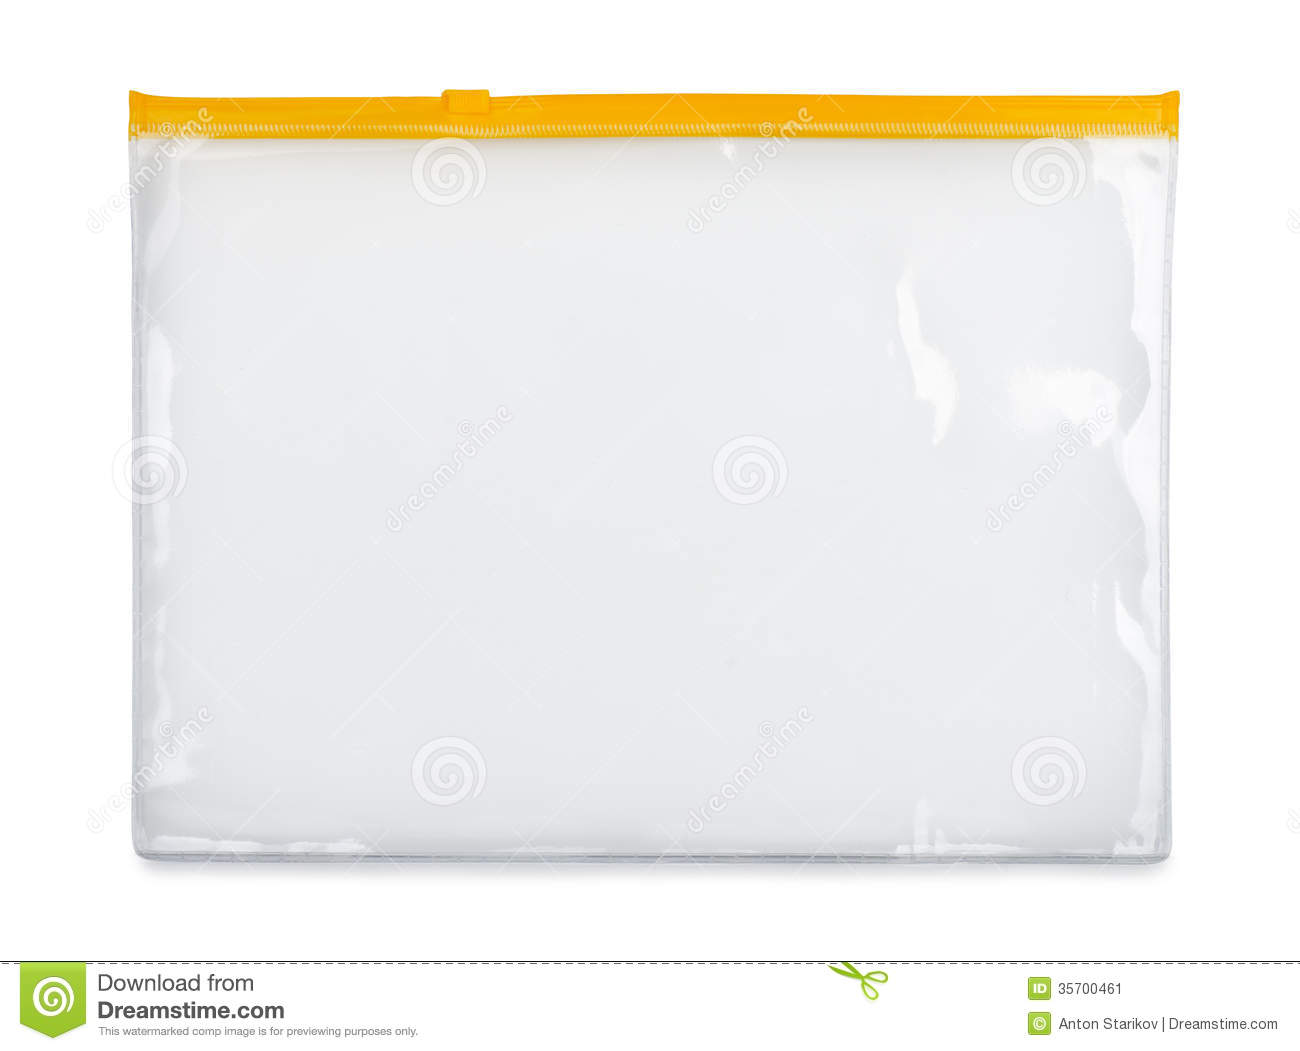 Plastic Zipper Bag Stock Image   Image  35700461